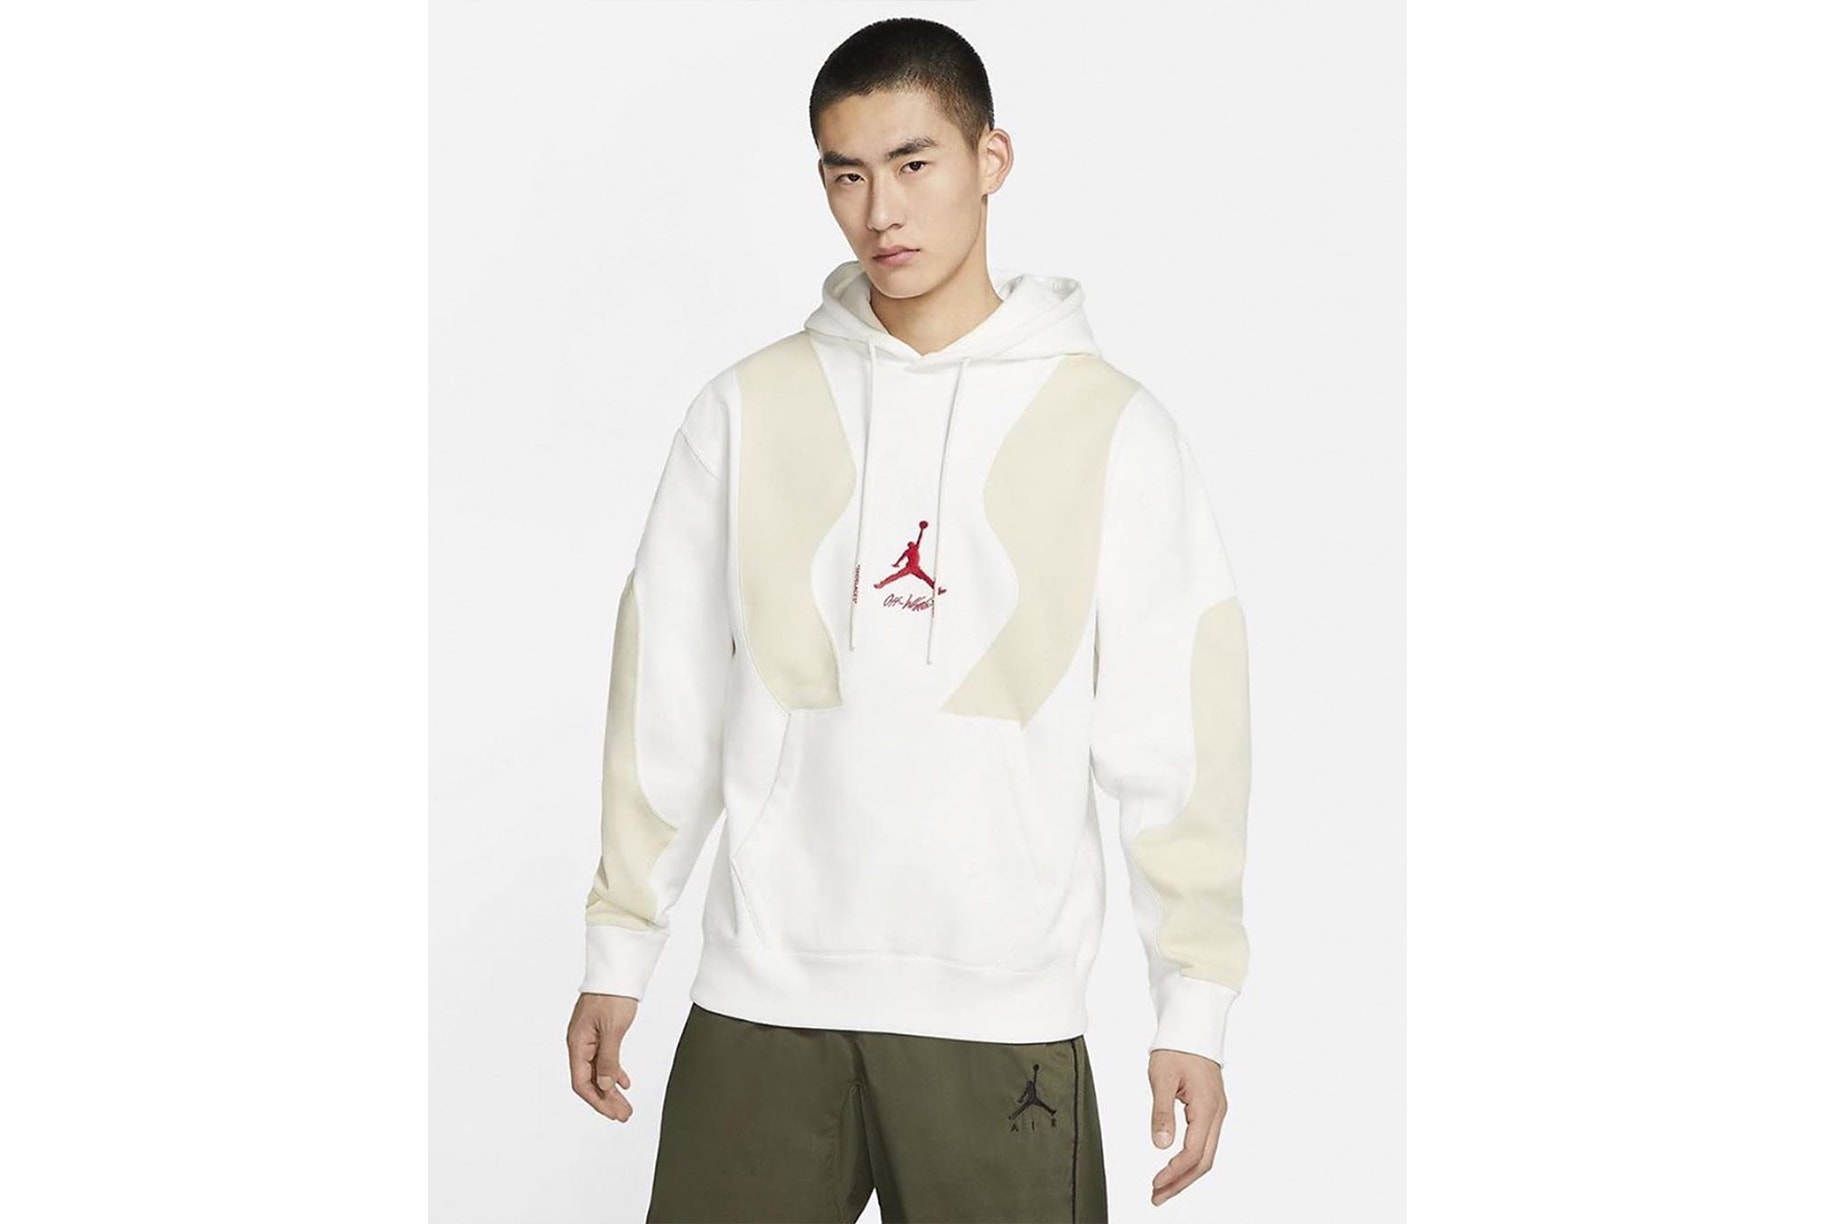 off-white jordan brand collaboration capsule t-shirts hoodies air jordan 5 aj5 sail release date info